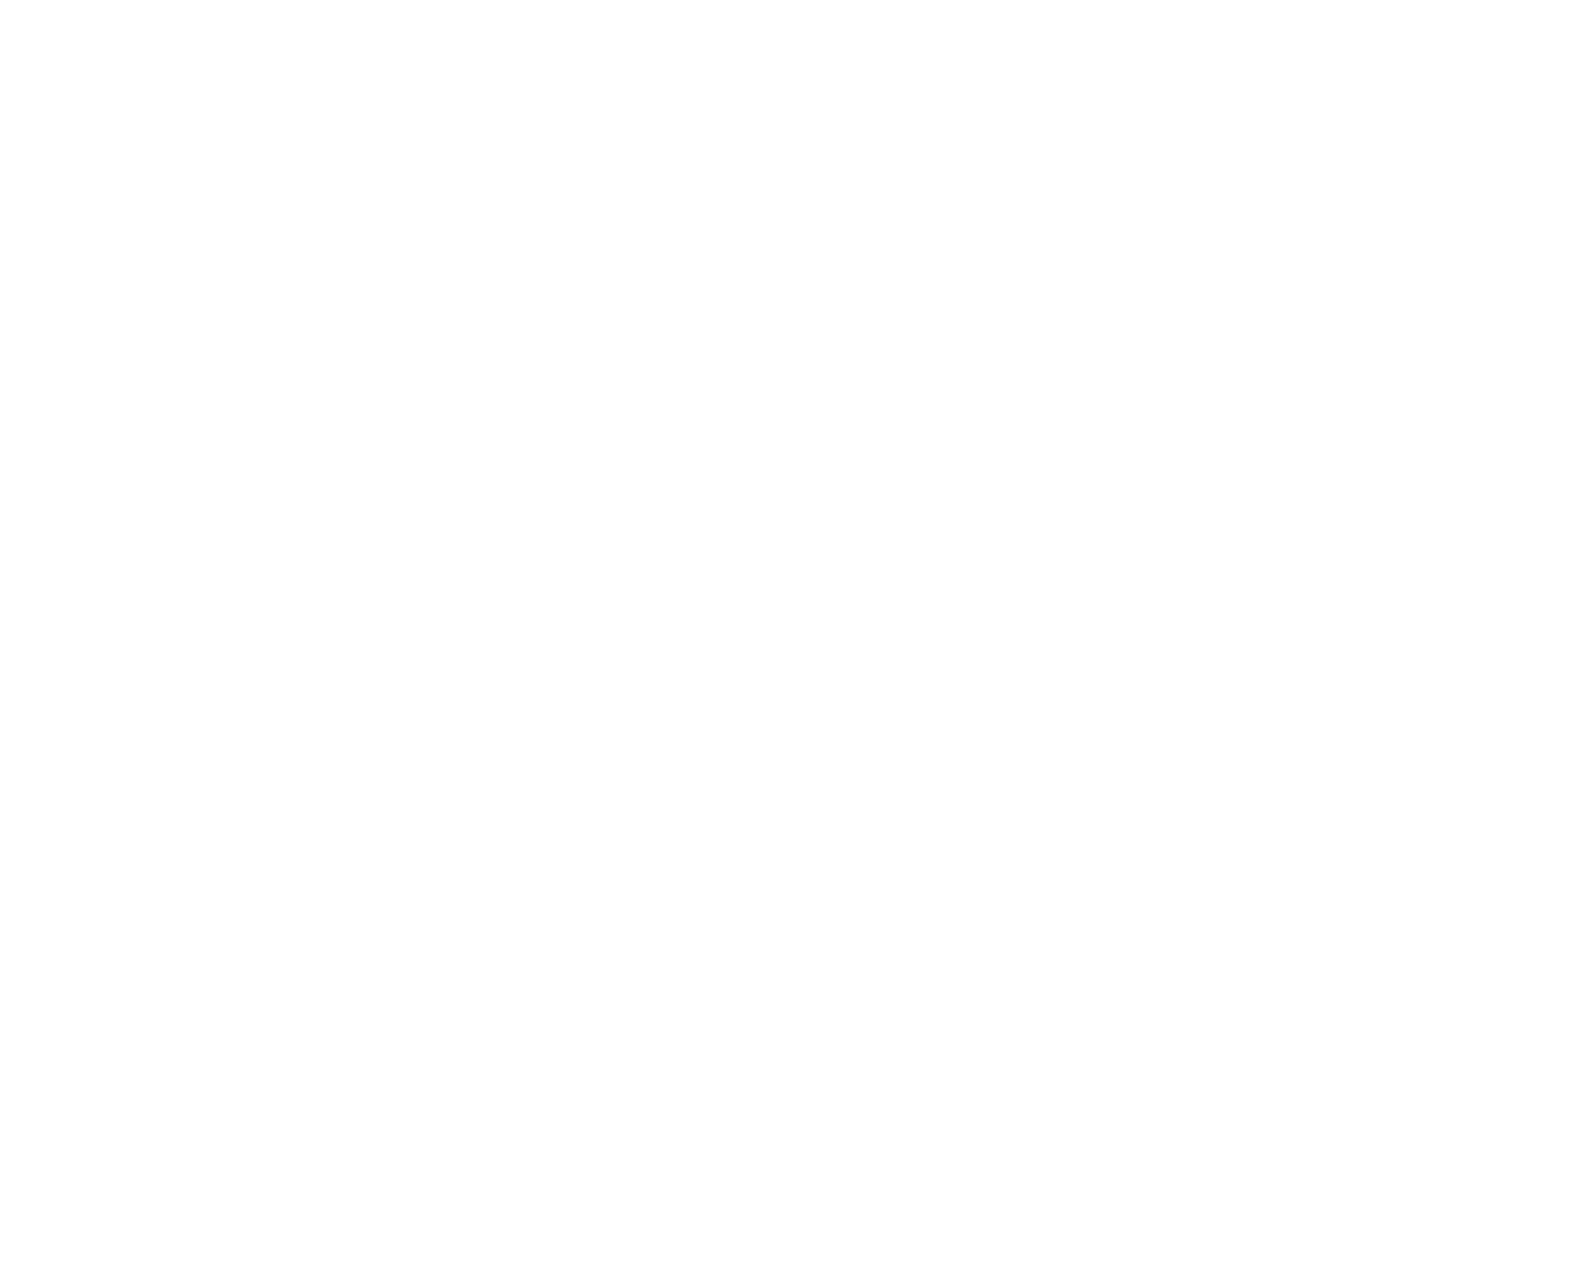 Abbott Laboratories logo for dark backgrounds (transparent PNG)